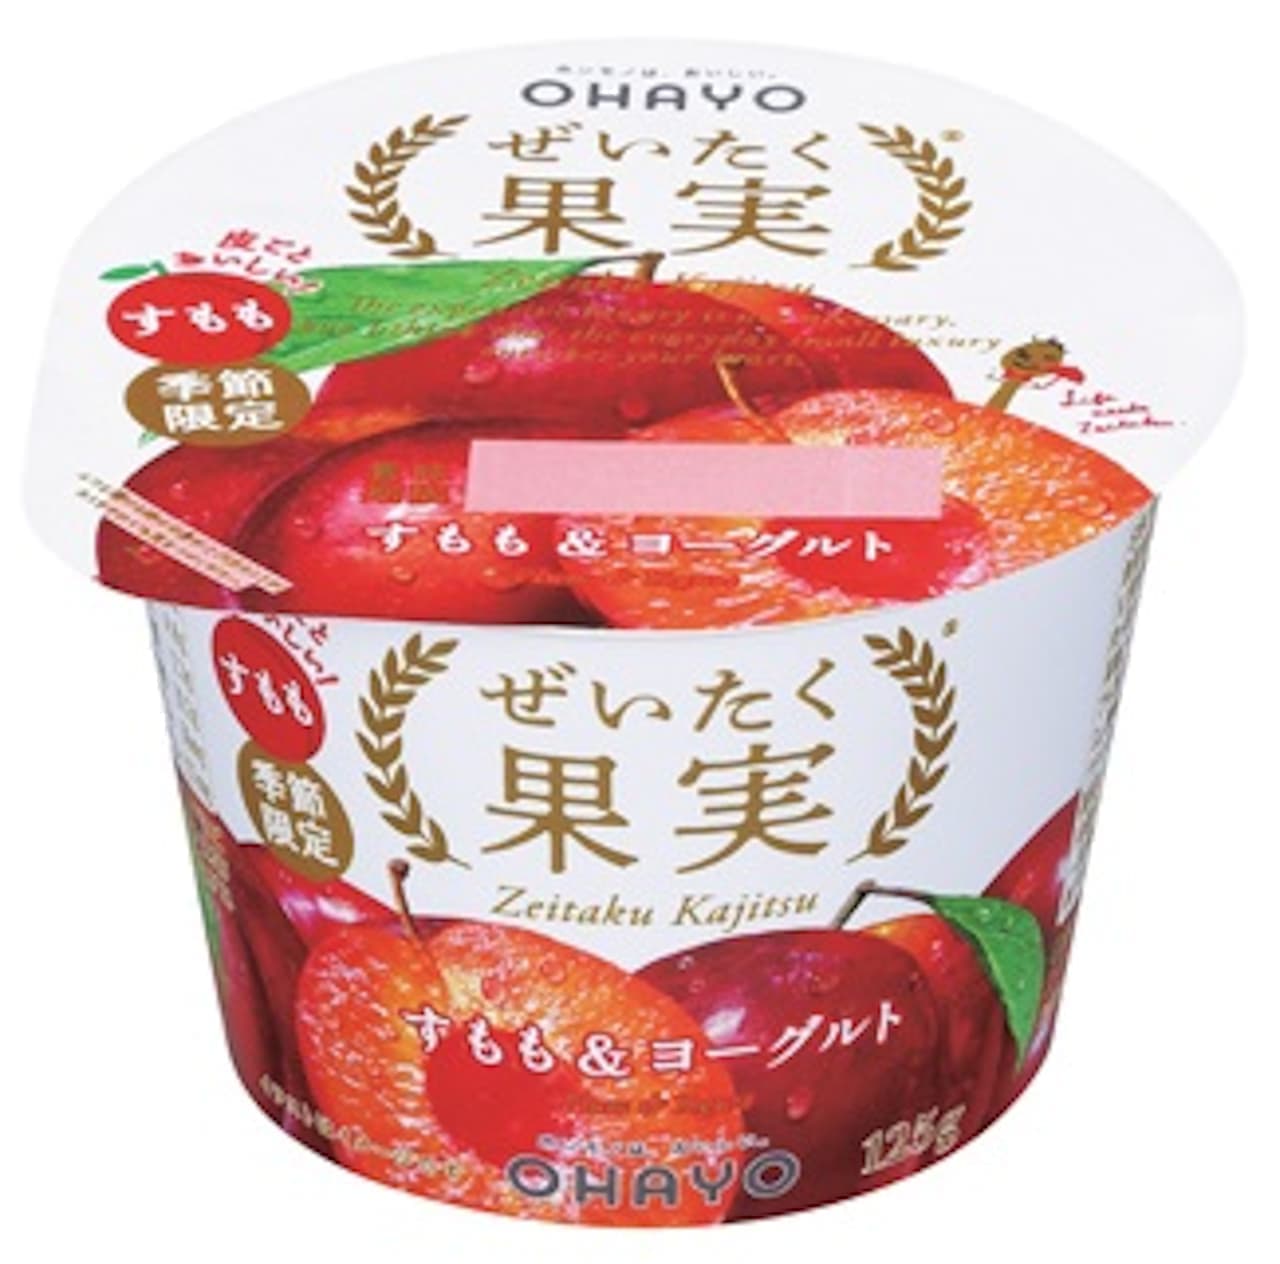 Ohayo Dairy Products "Luxury Fruit Plums & Yogurt"